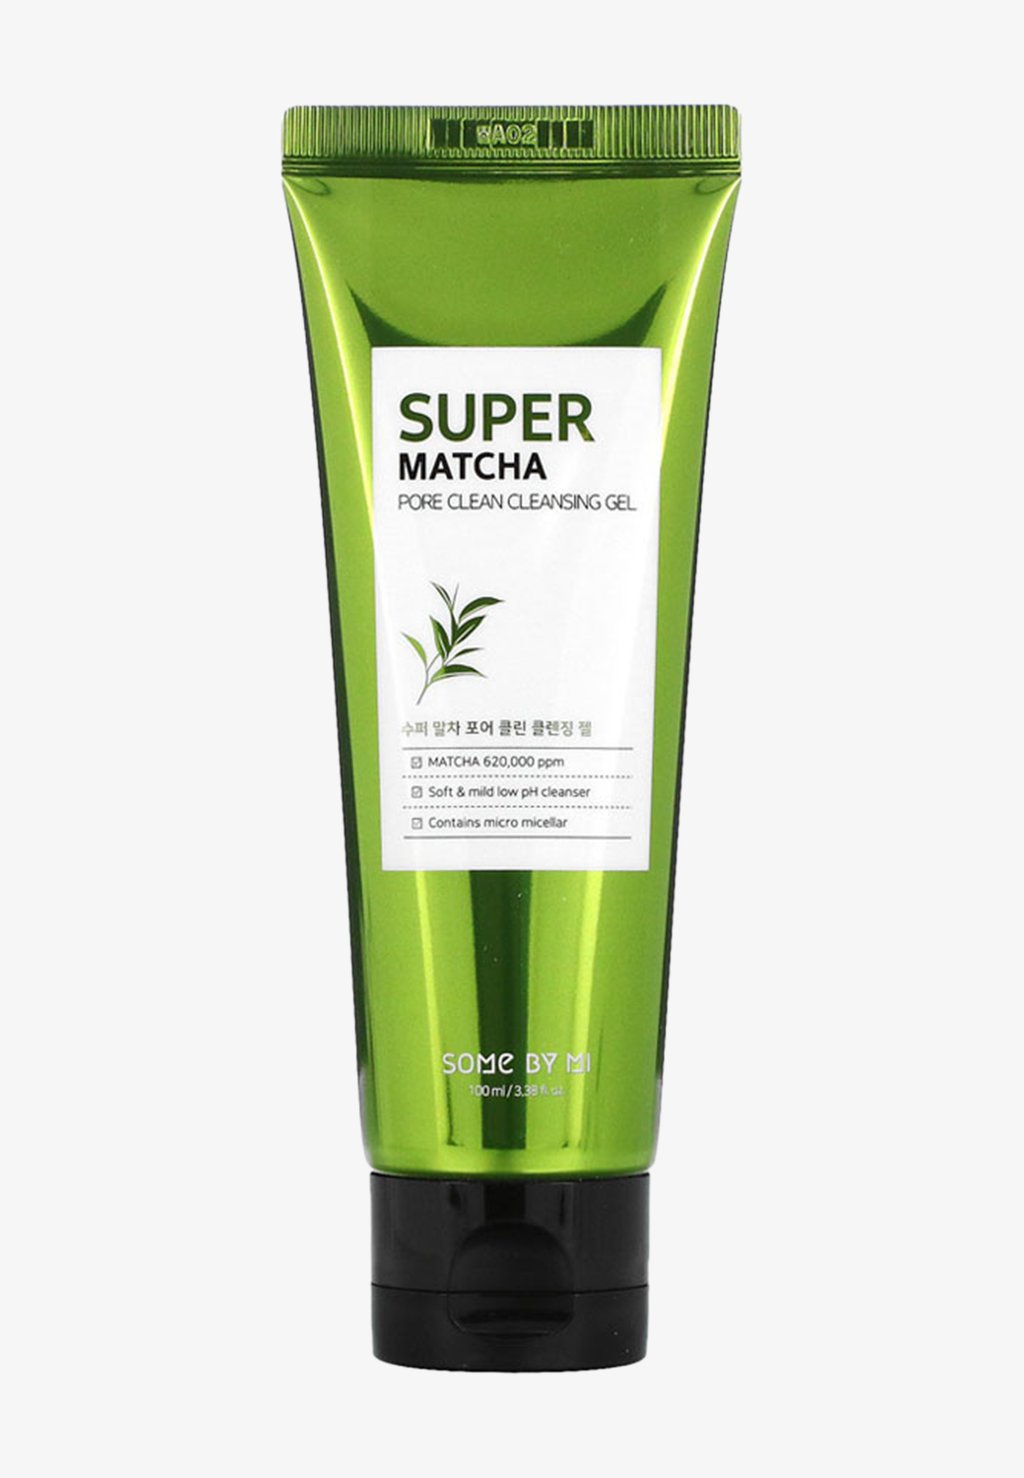 Очищающее средство Super Matcha Pore Clean Cleansing Gel SOME BY MI